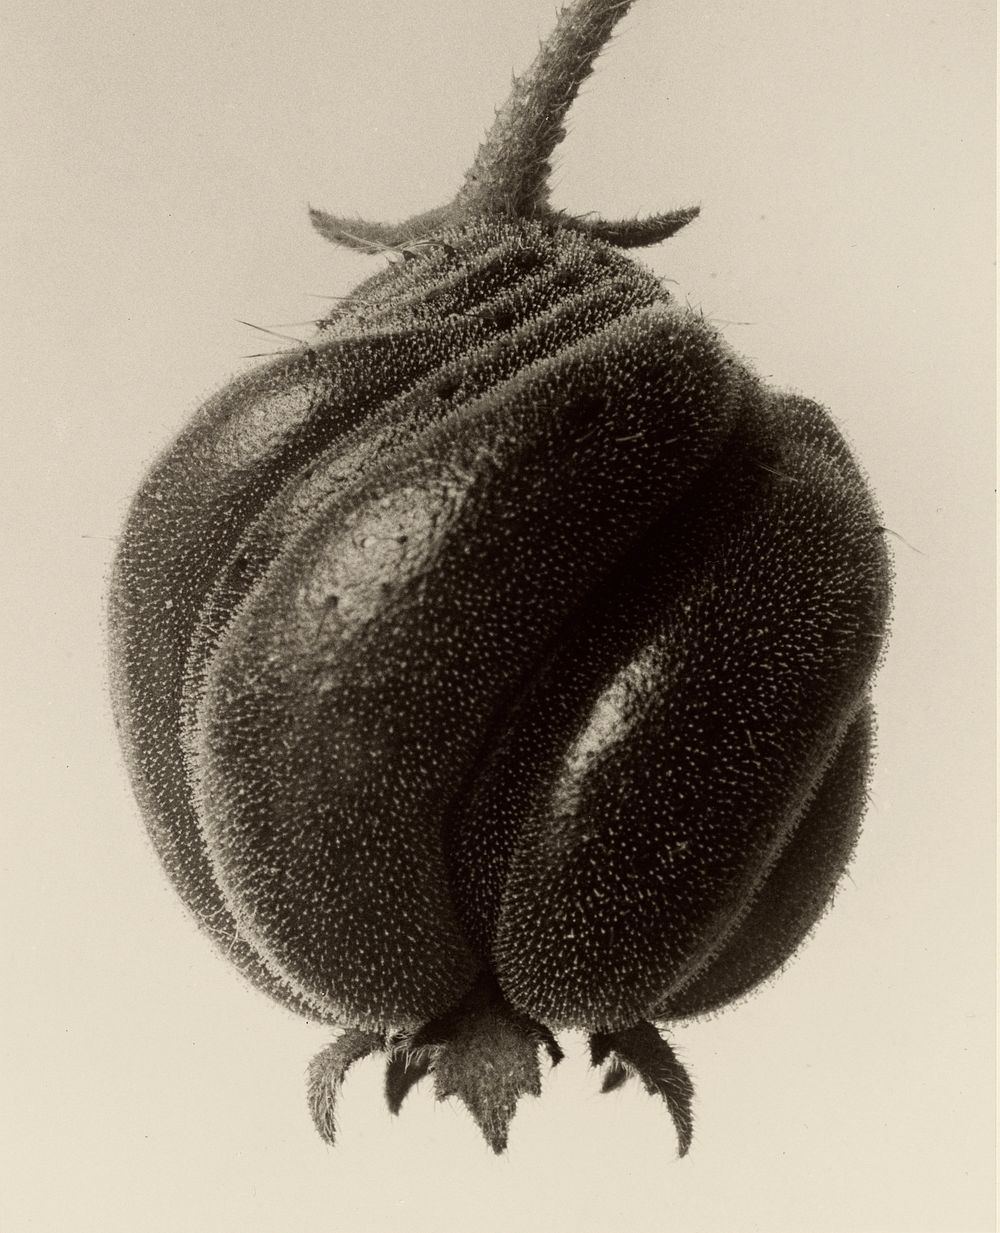 Blumenbachia hieronymi (Loasaceae) by Karl Blossfeldt (1865-1932)